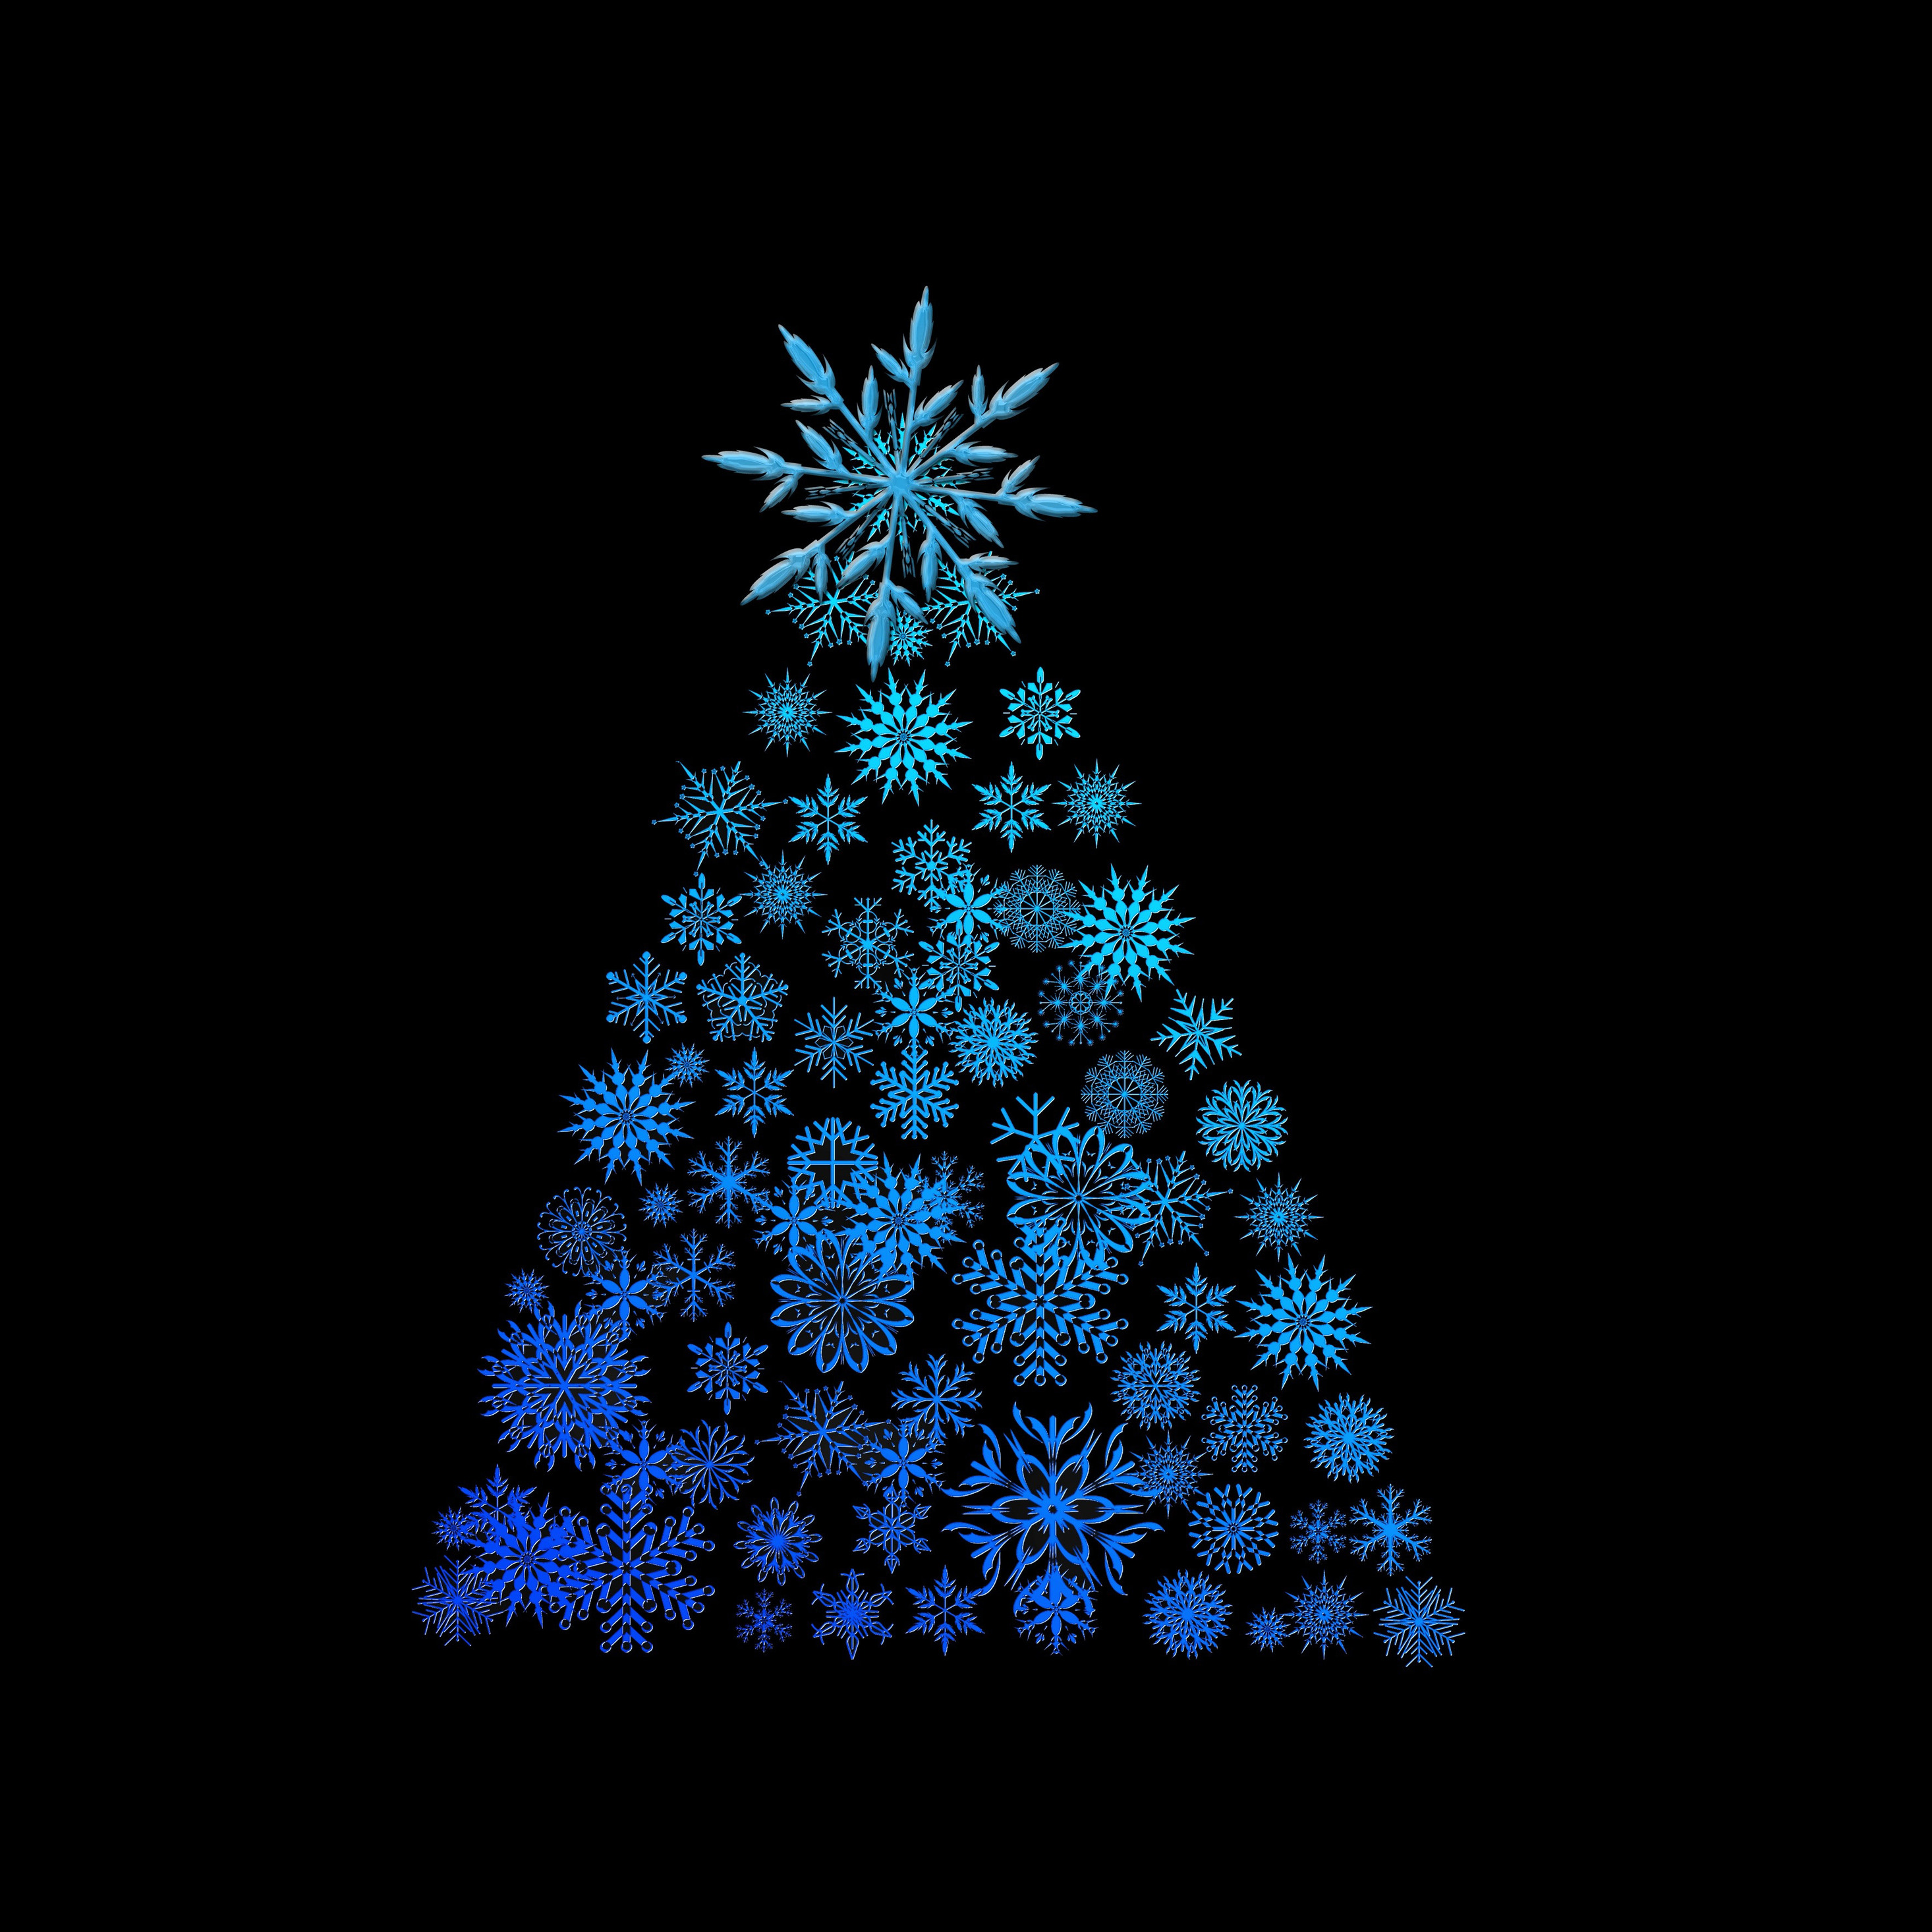 Christmas Tree Digital Art iPad Pro Retina Display HD 4k Wallpaper, Image, Background, Photo and Picture